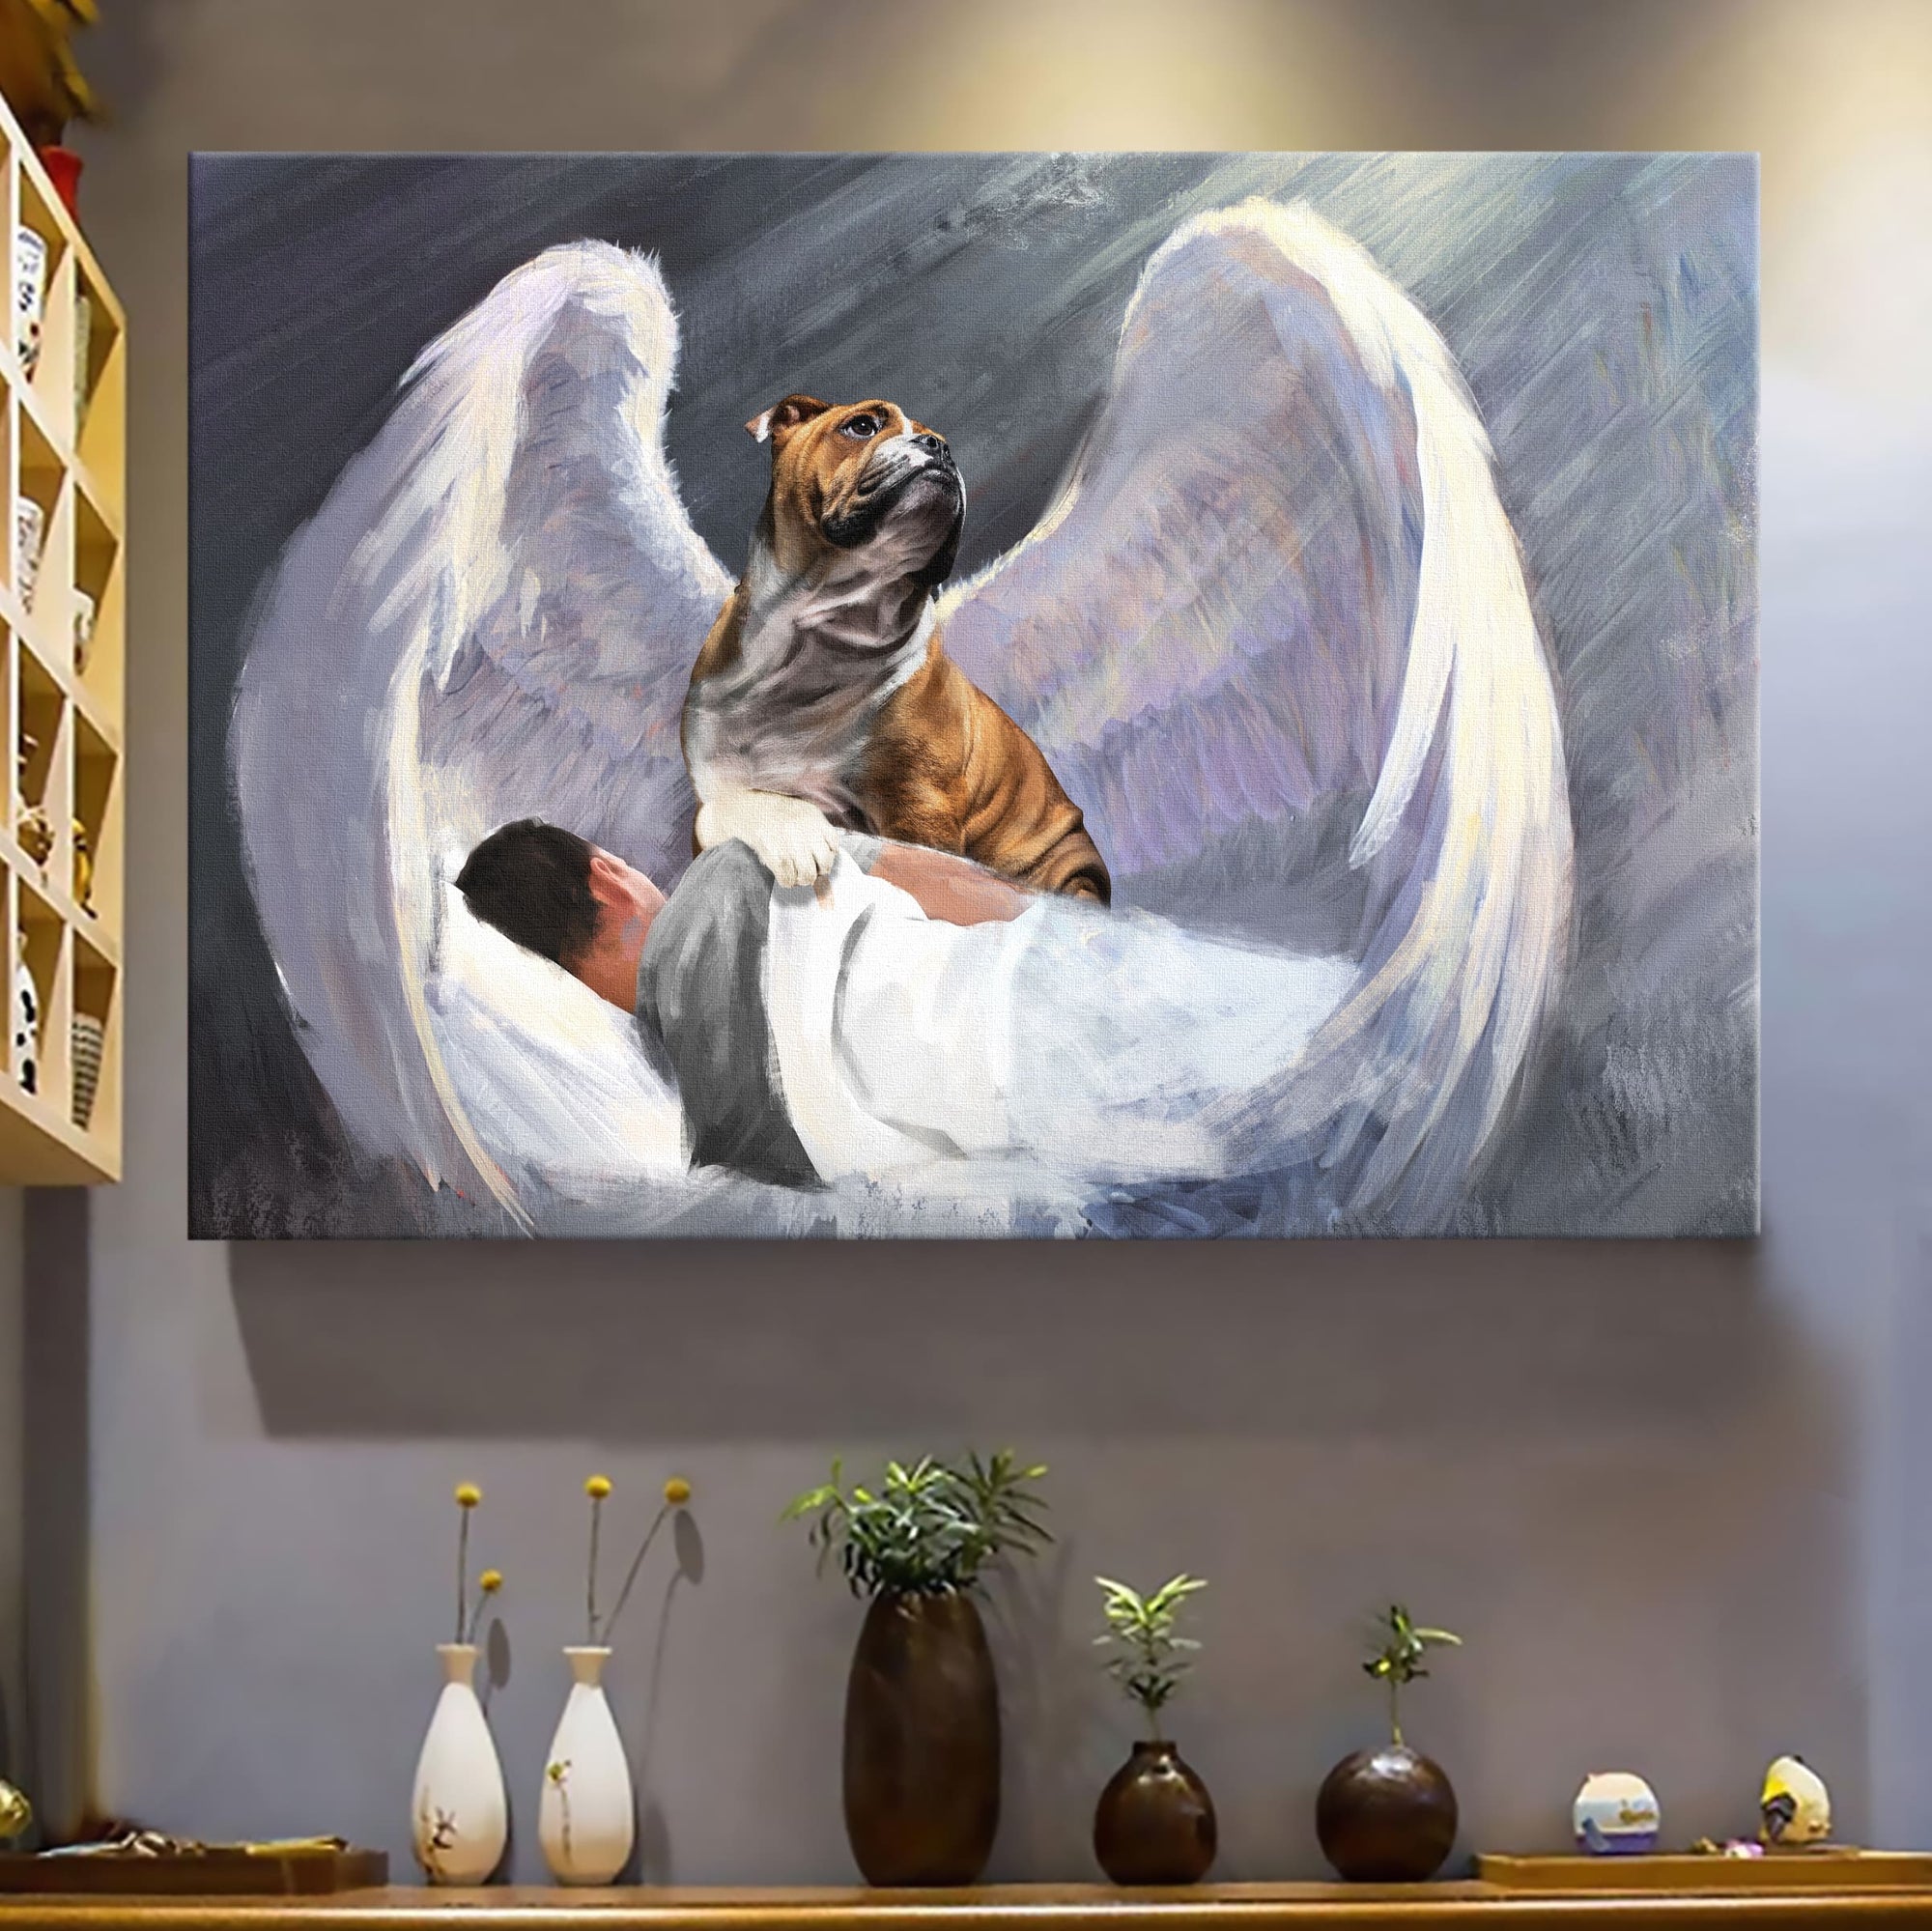 Bulldog Angel, Sleeping man, Mystic Light - Bulldog Landscape Canvas Prints, Wall Art